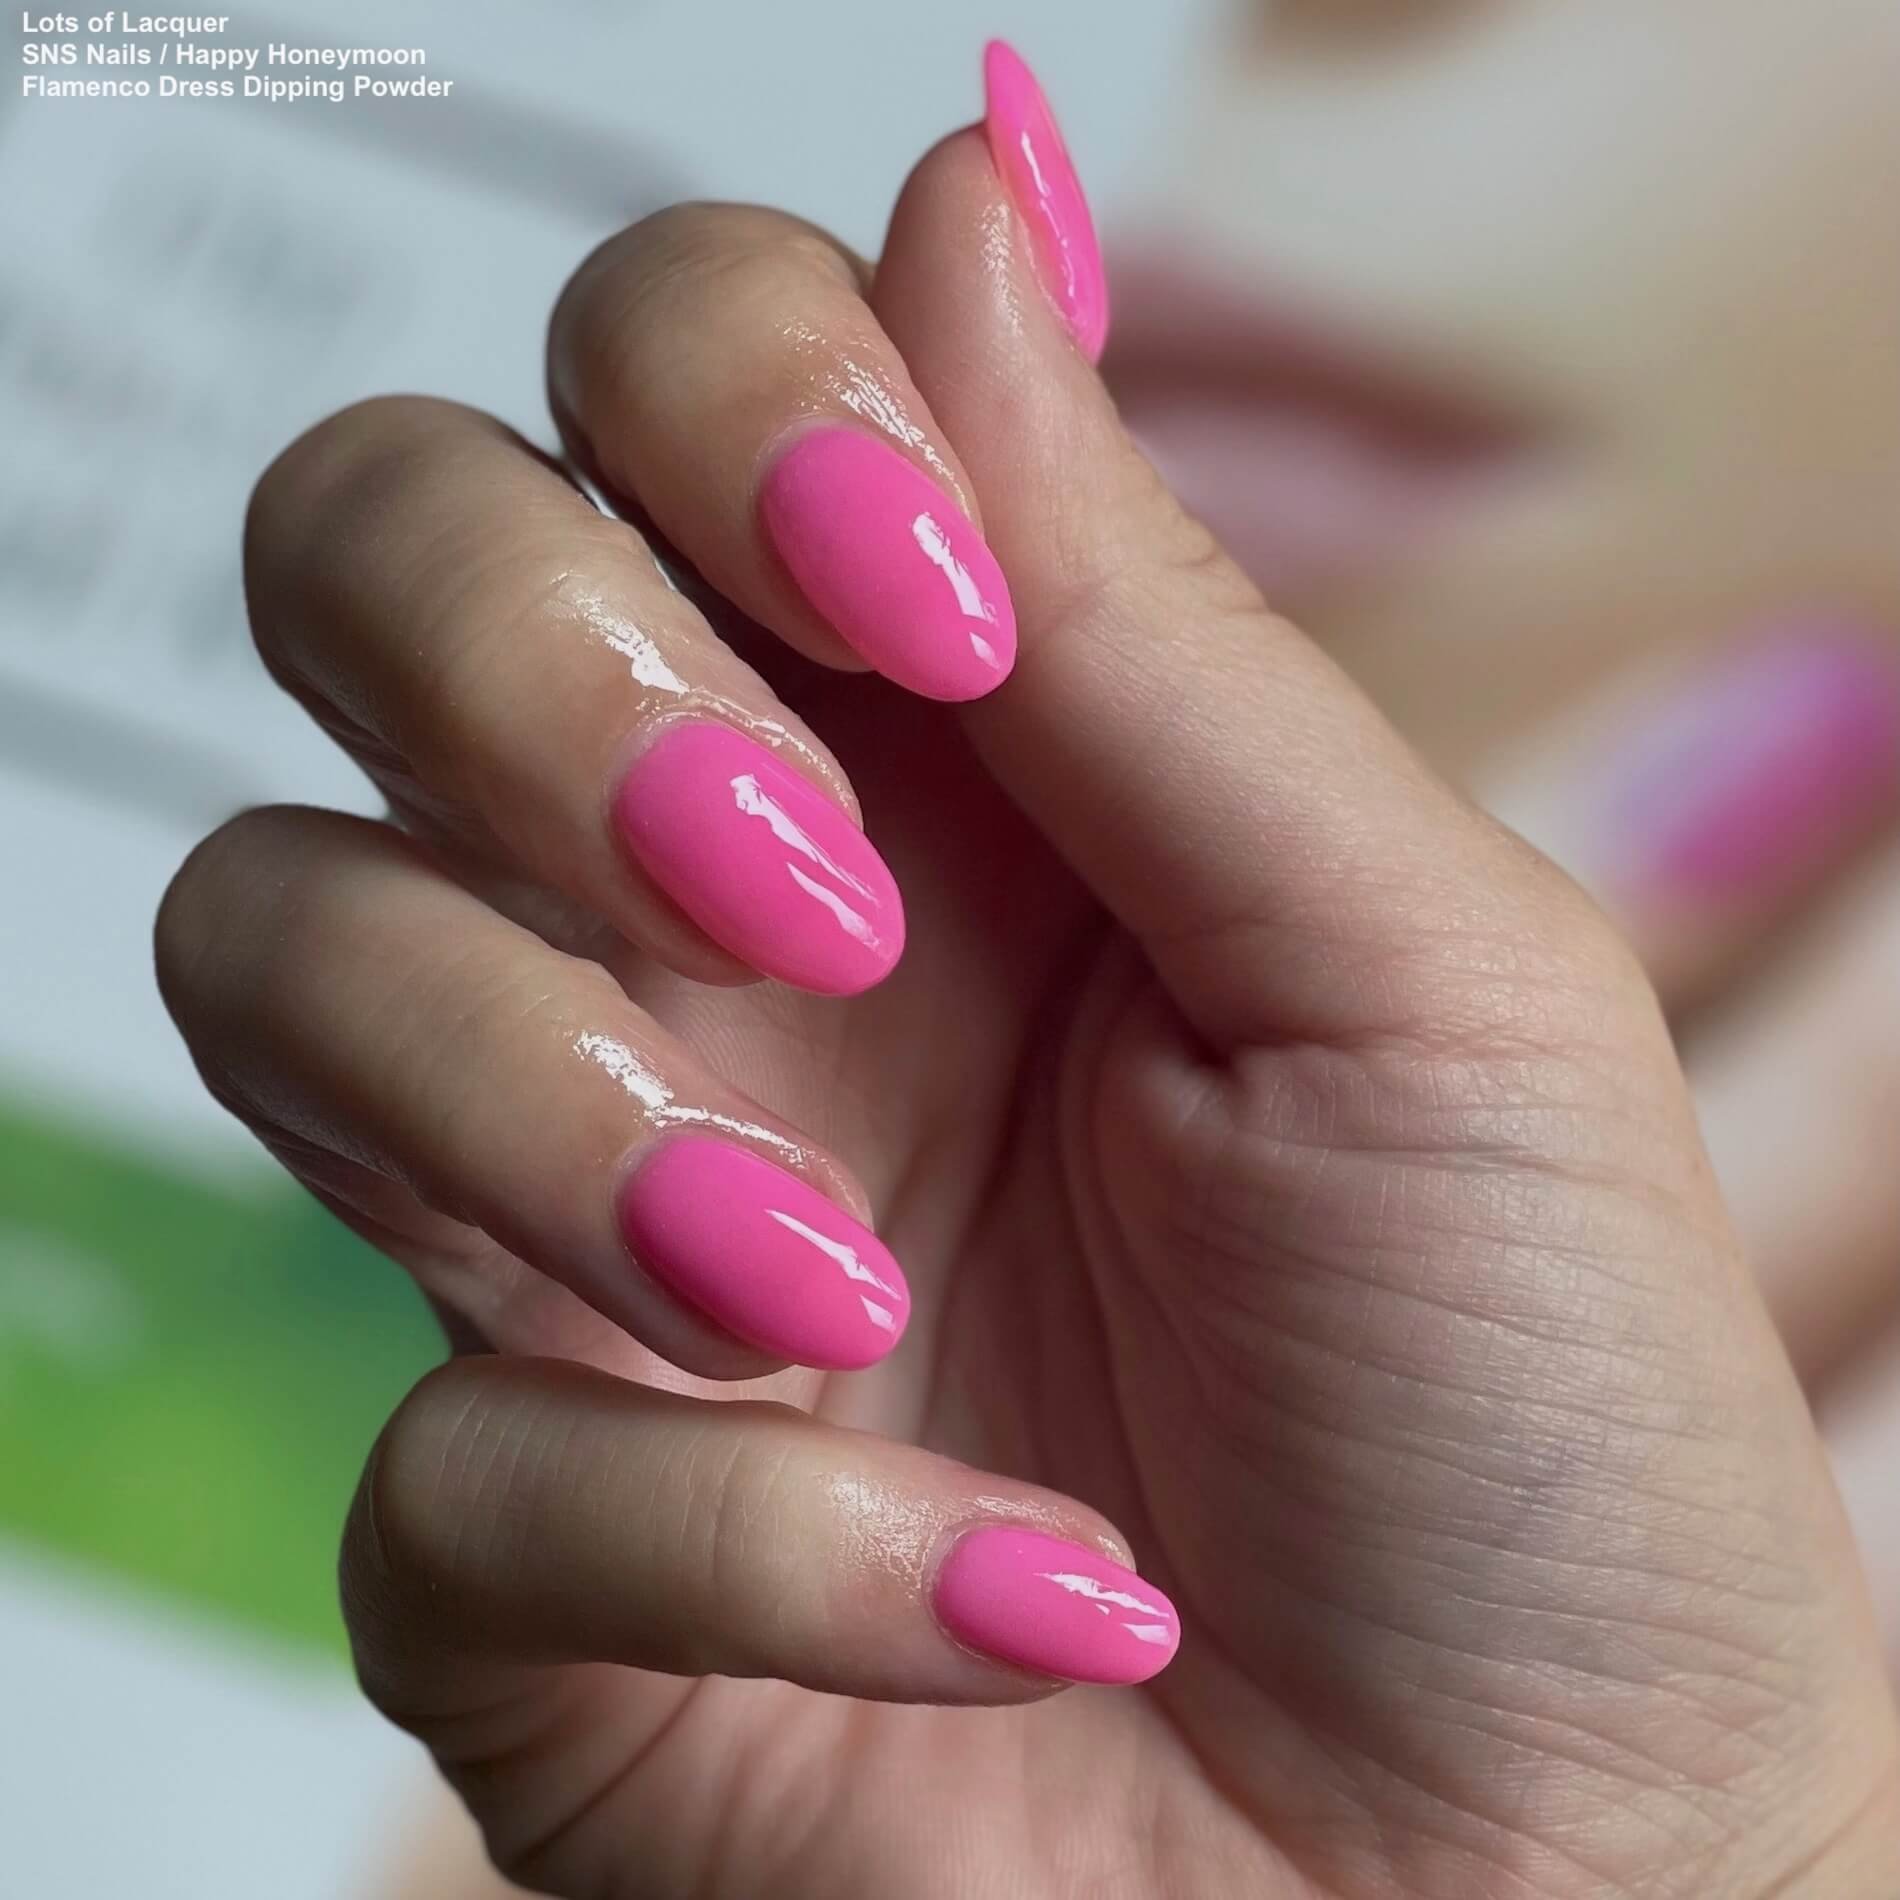 SNS Nail Dipping Powder Pink Glitter F1 2oz | eBay